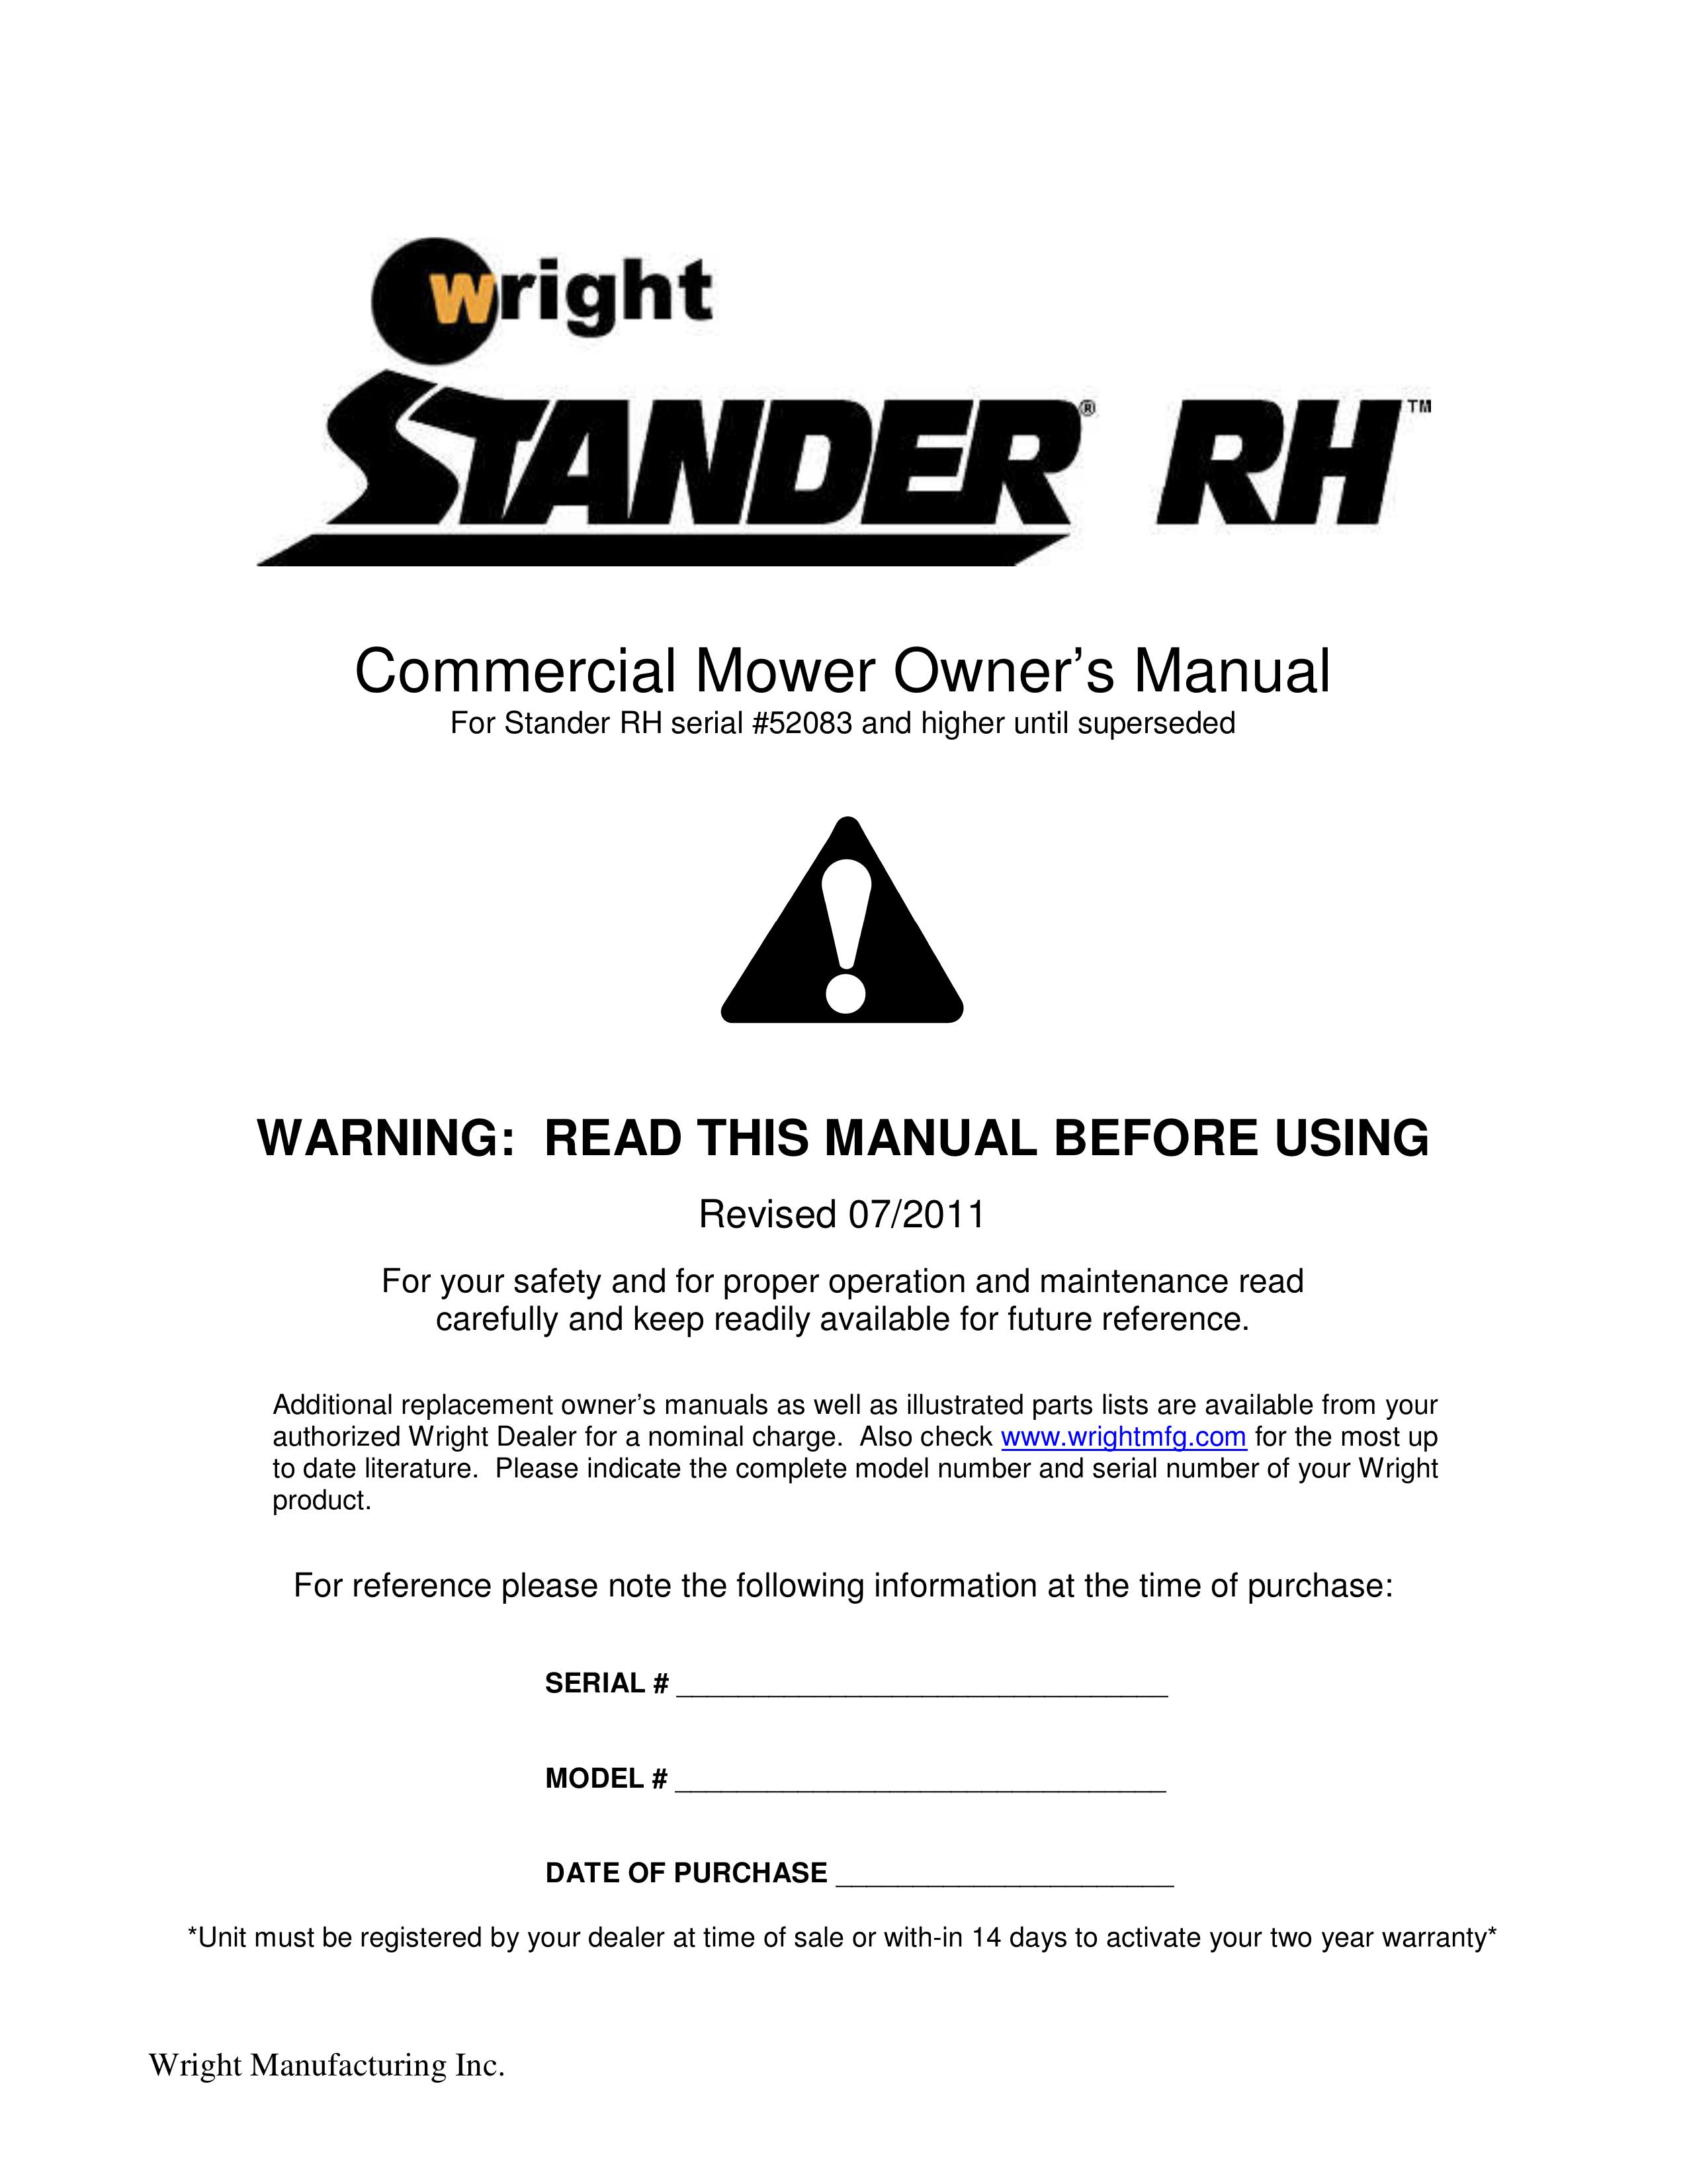 Wright Manufacturing 52083 Lawn Mower User Manual